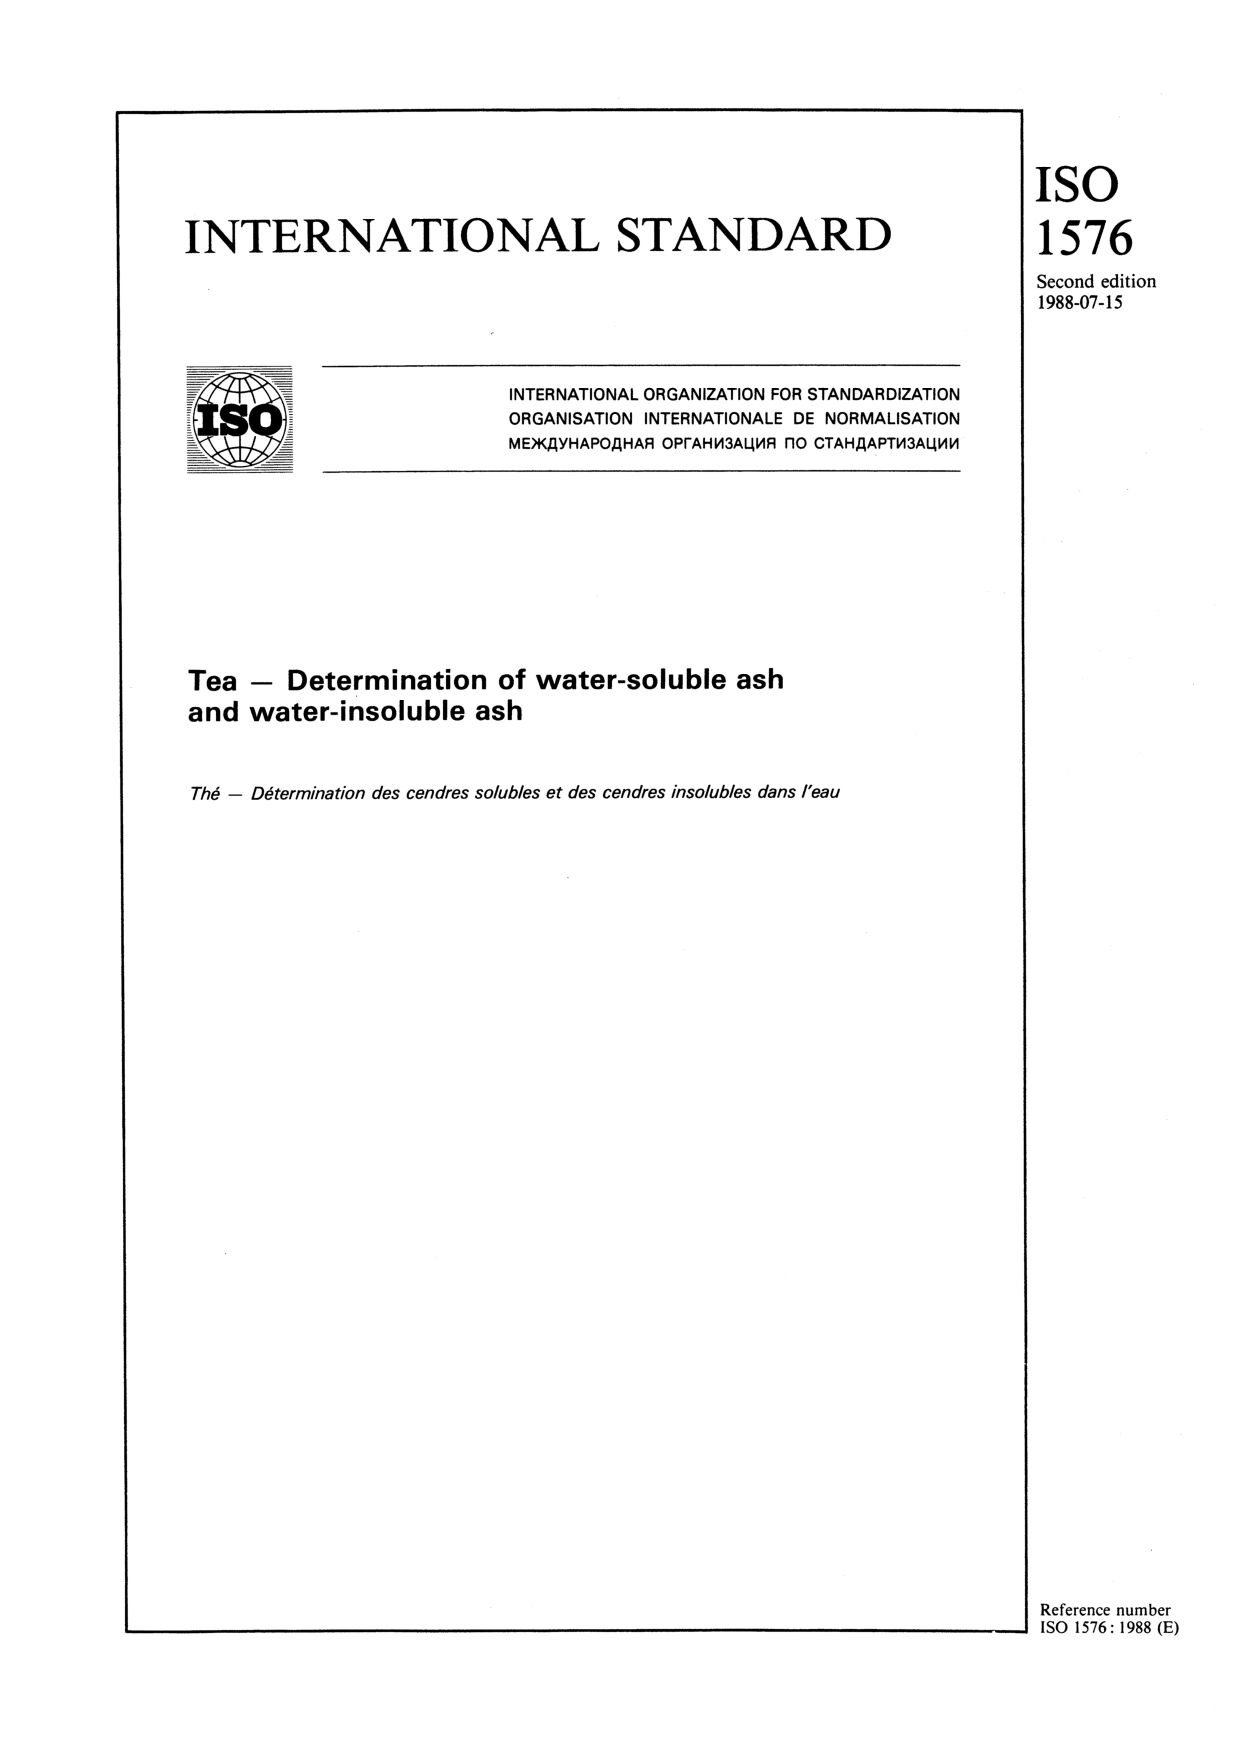 ISO 1576:1988封面图